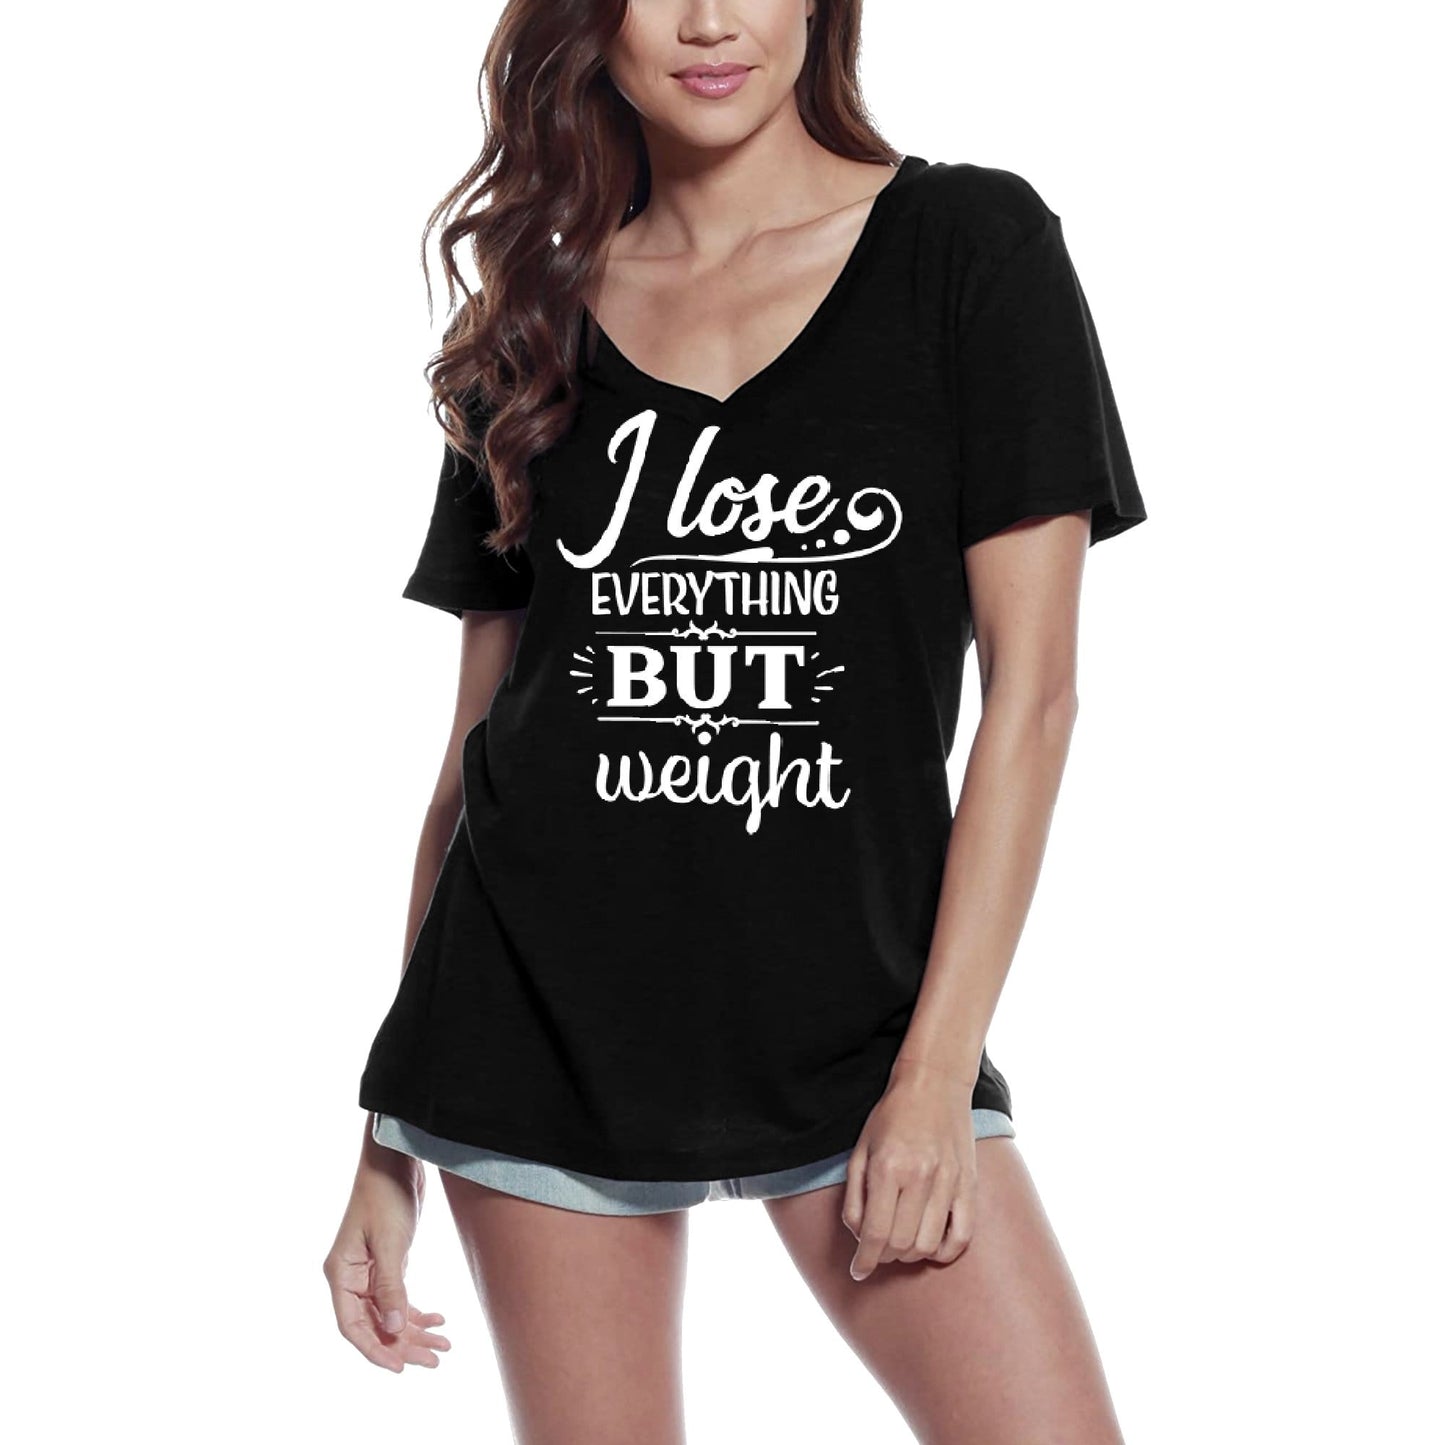 ULTRABASIC Women's T-Shirt I Lose Everything but Weight - Short Sleeve Tee Shirt Tops